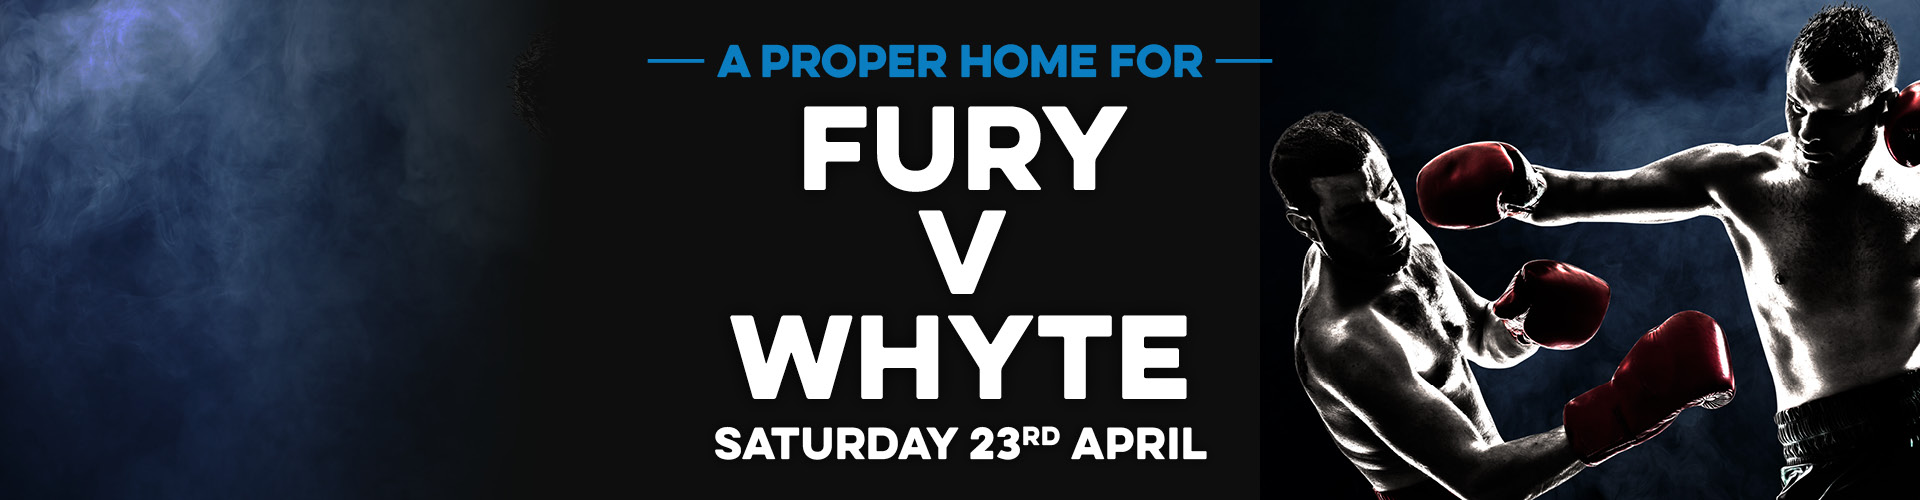 Watch Fury vs Whyte live in Ilkley